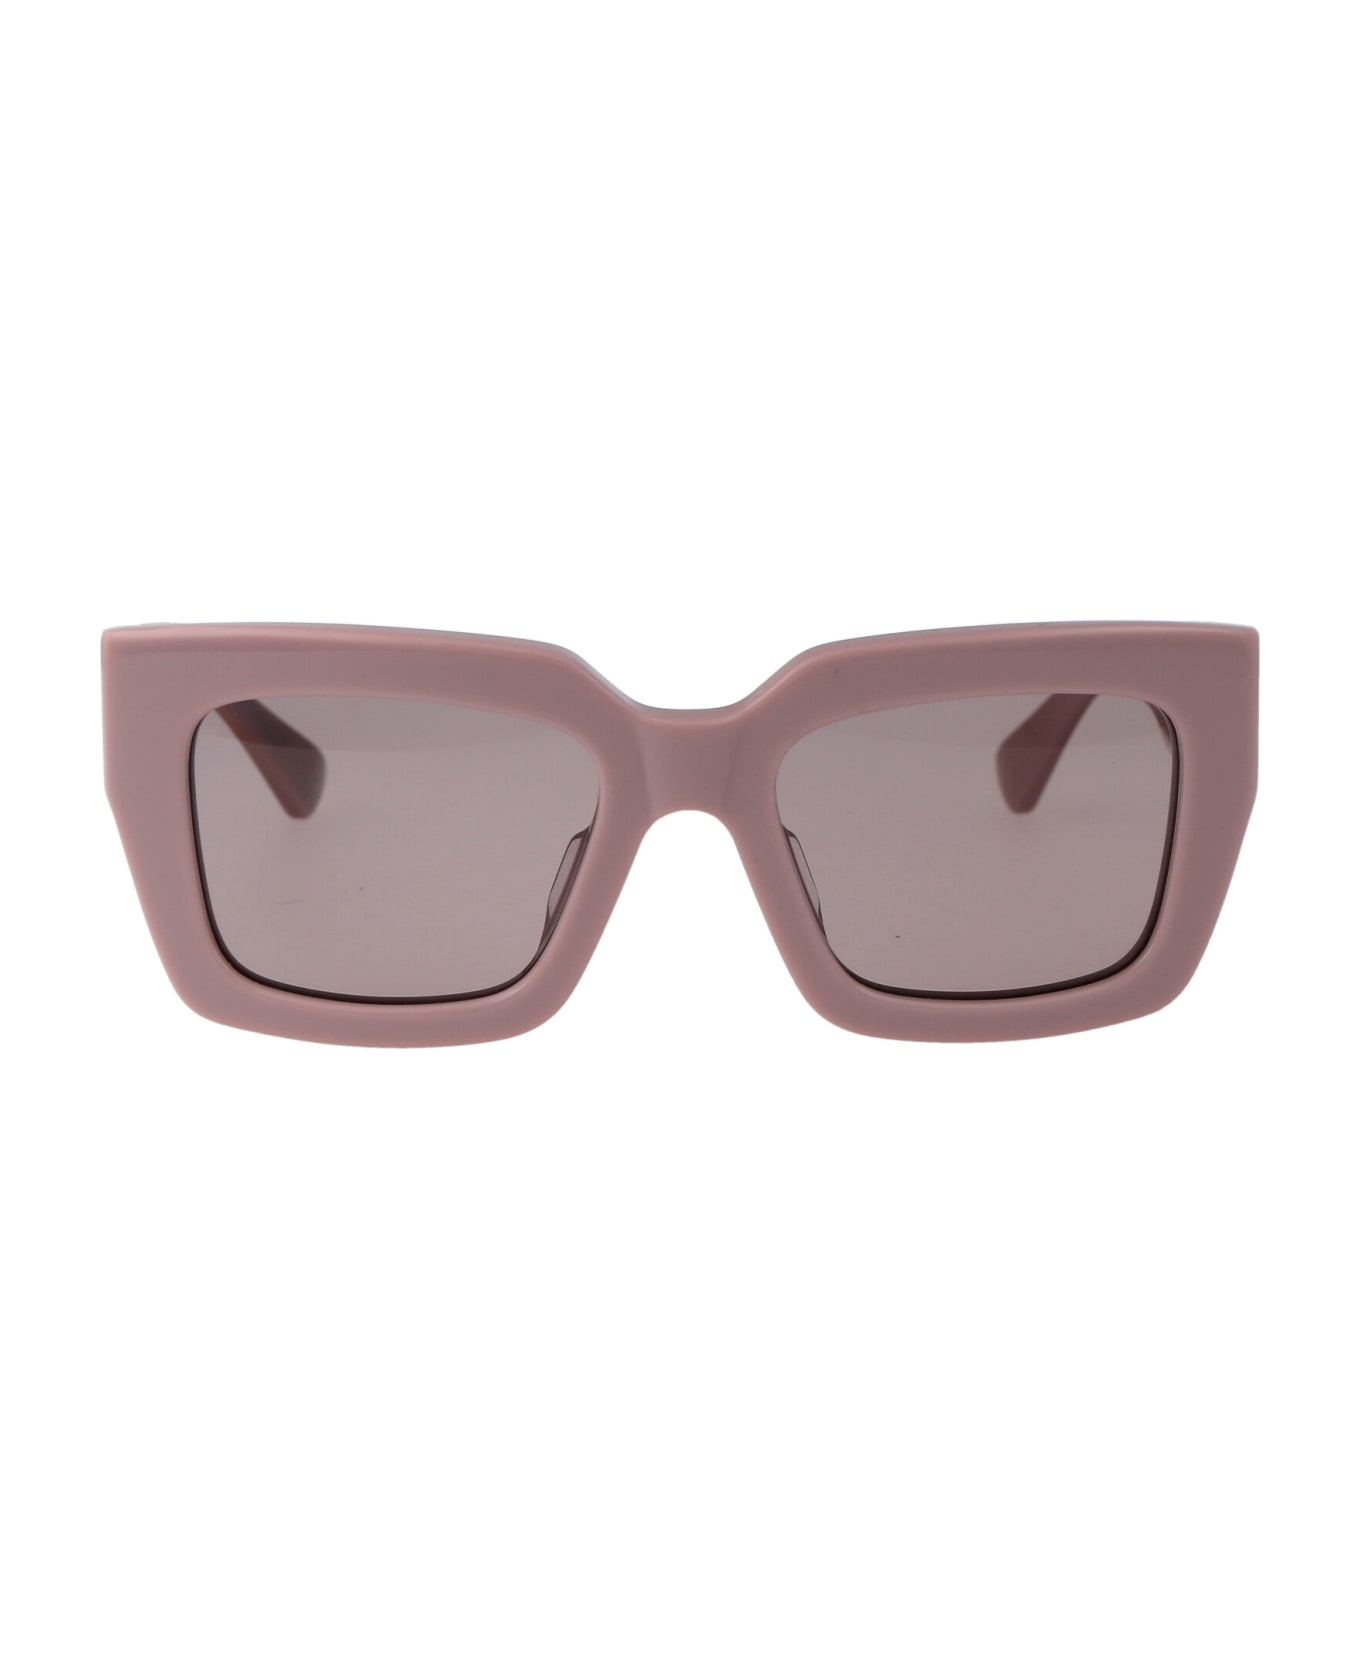 Bottega Veneta Eyewear Bv1212s Sunglasses - 006 PINK PINK VIOLET サングラス